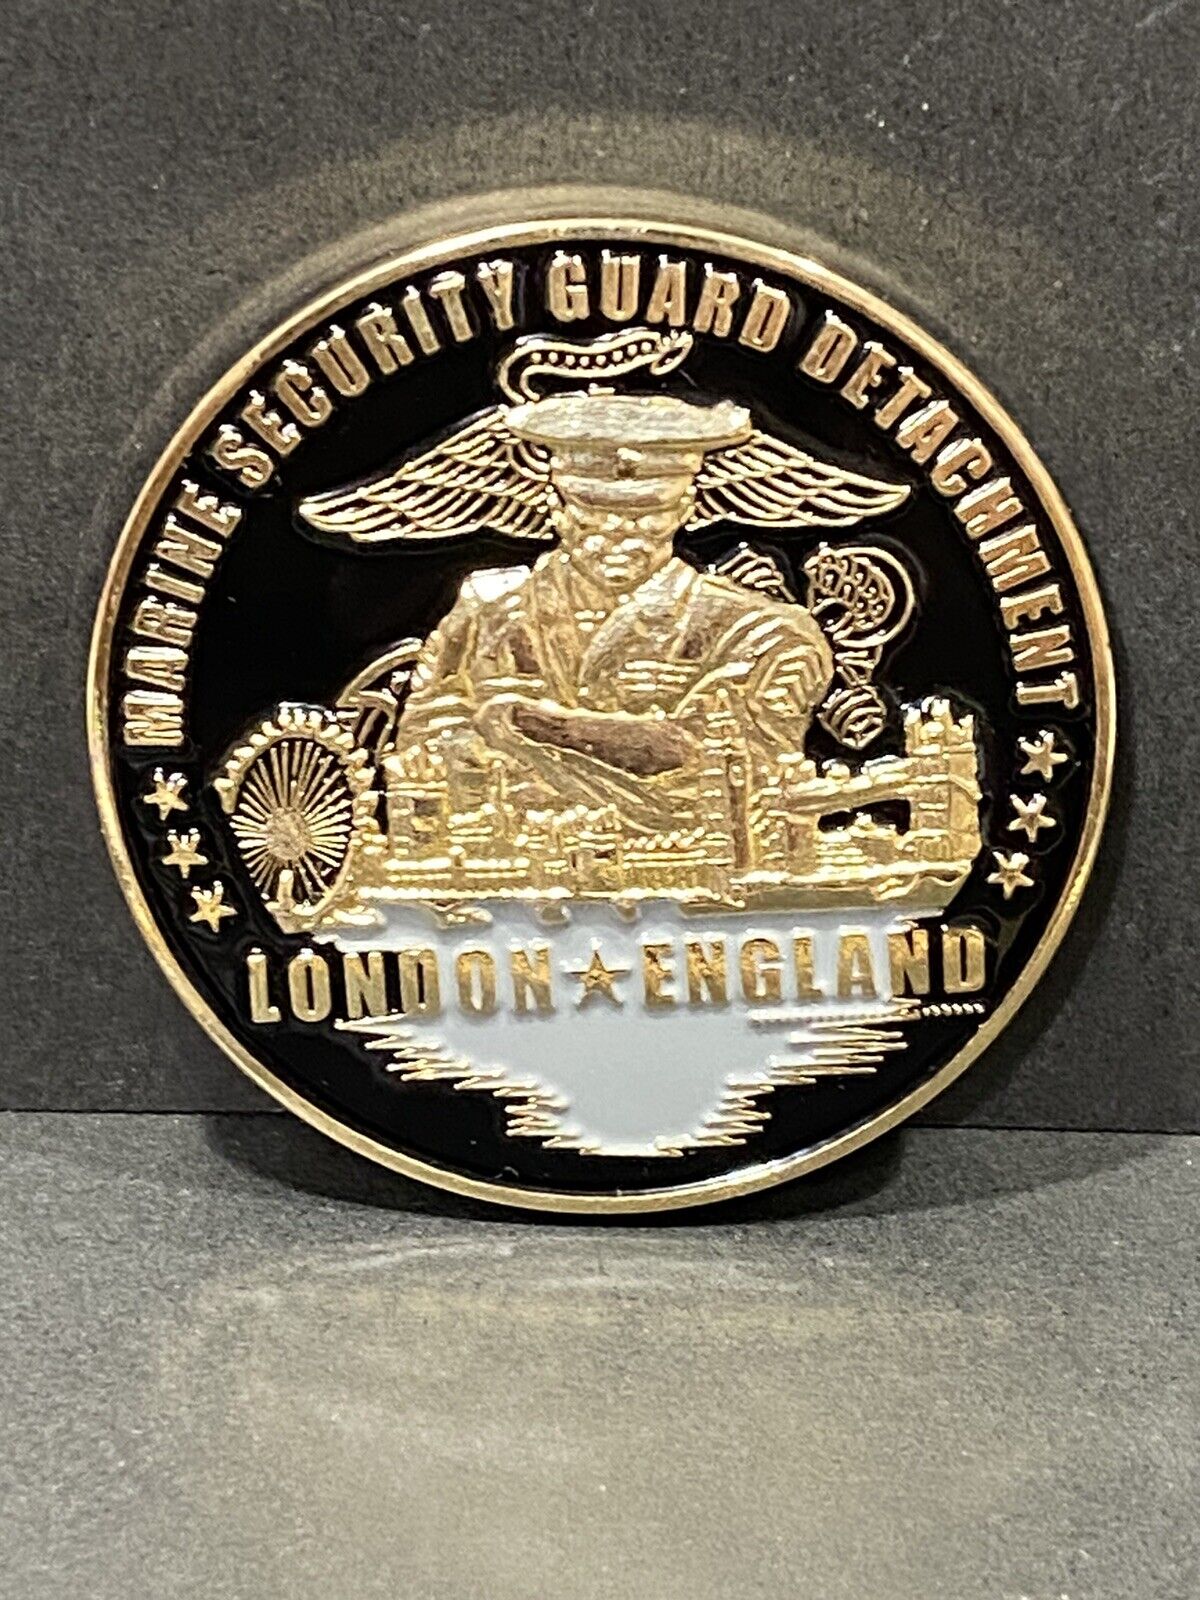 Marine Security Guard Detachment London, England Challenge Coin - 236th Birthday